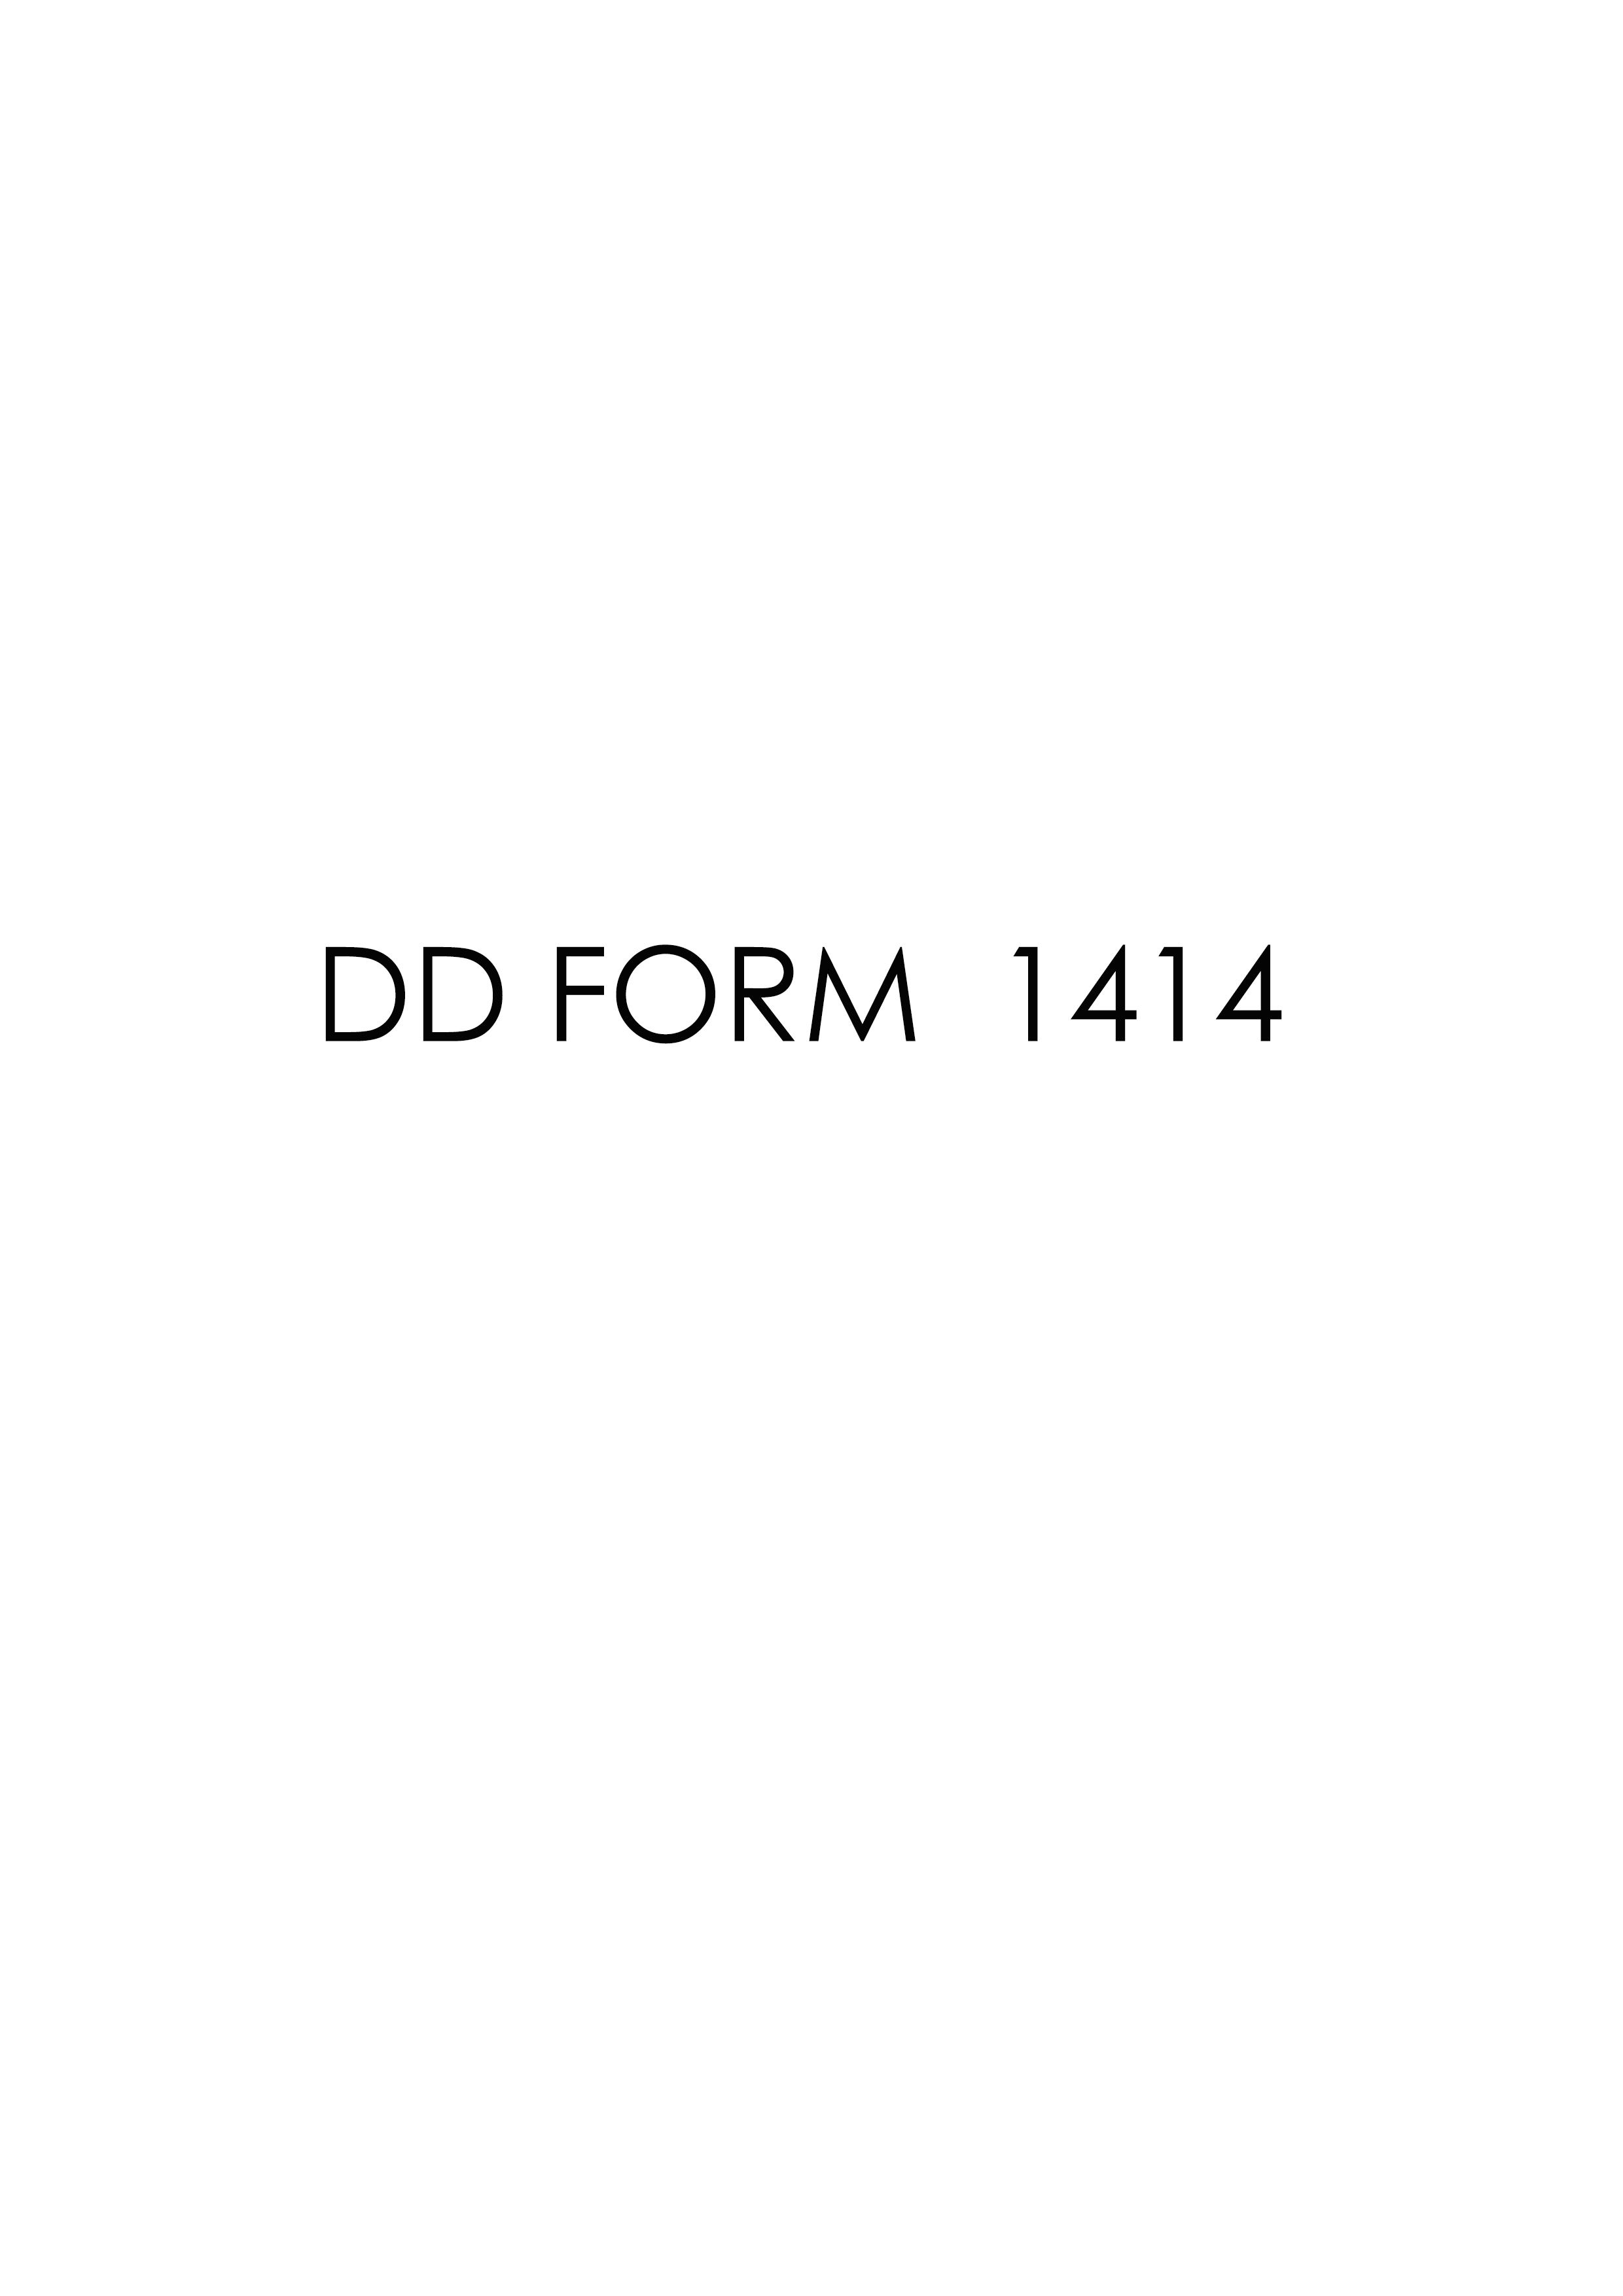 Download dd form 1414